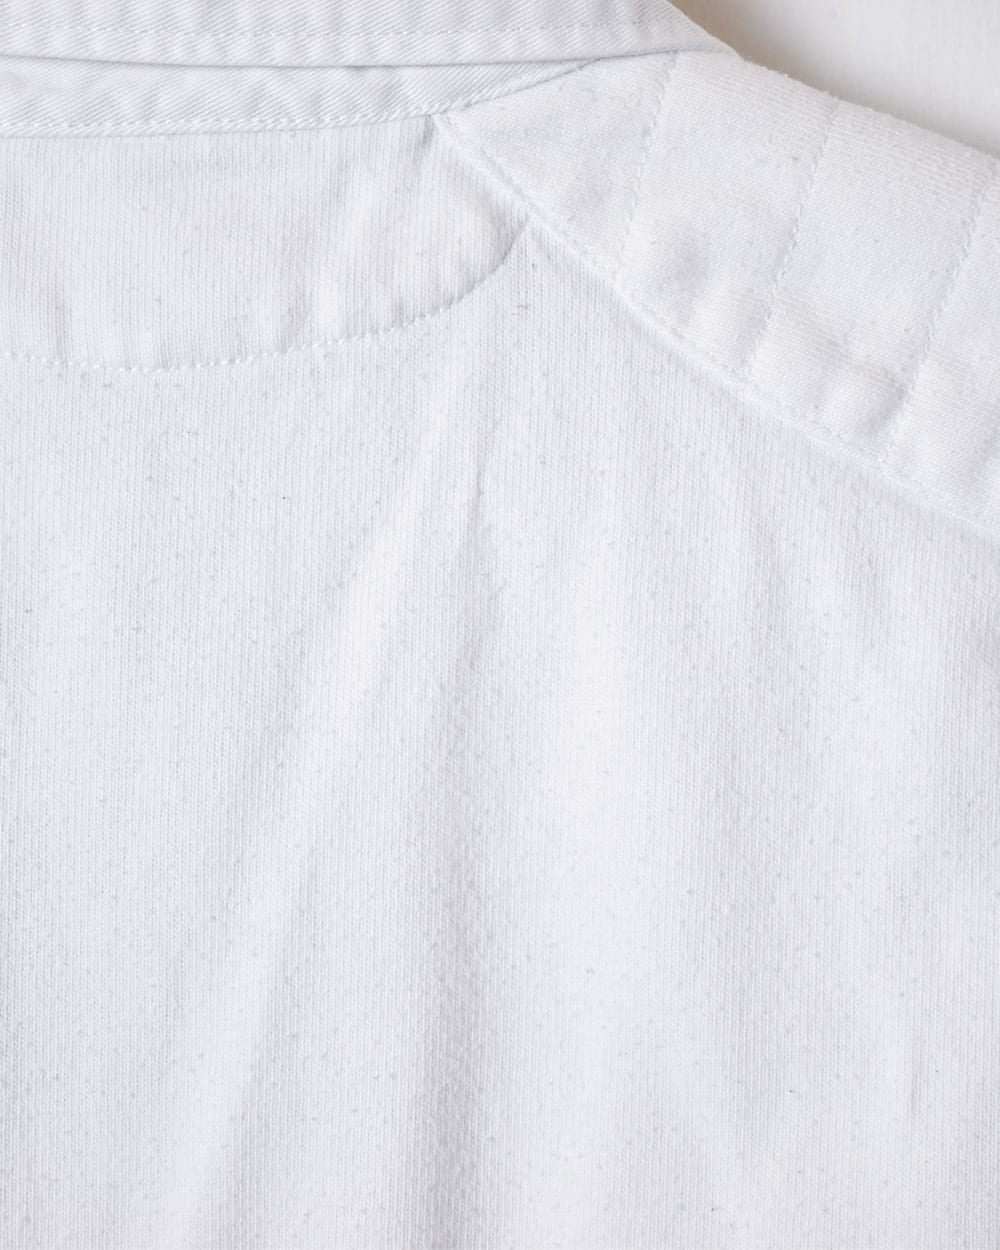 White Polo Ralph Lauren Rugby Shirt - Medium